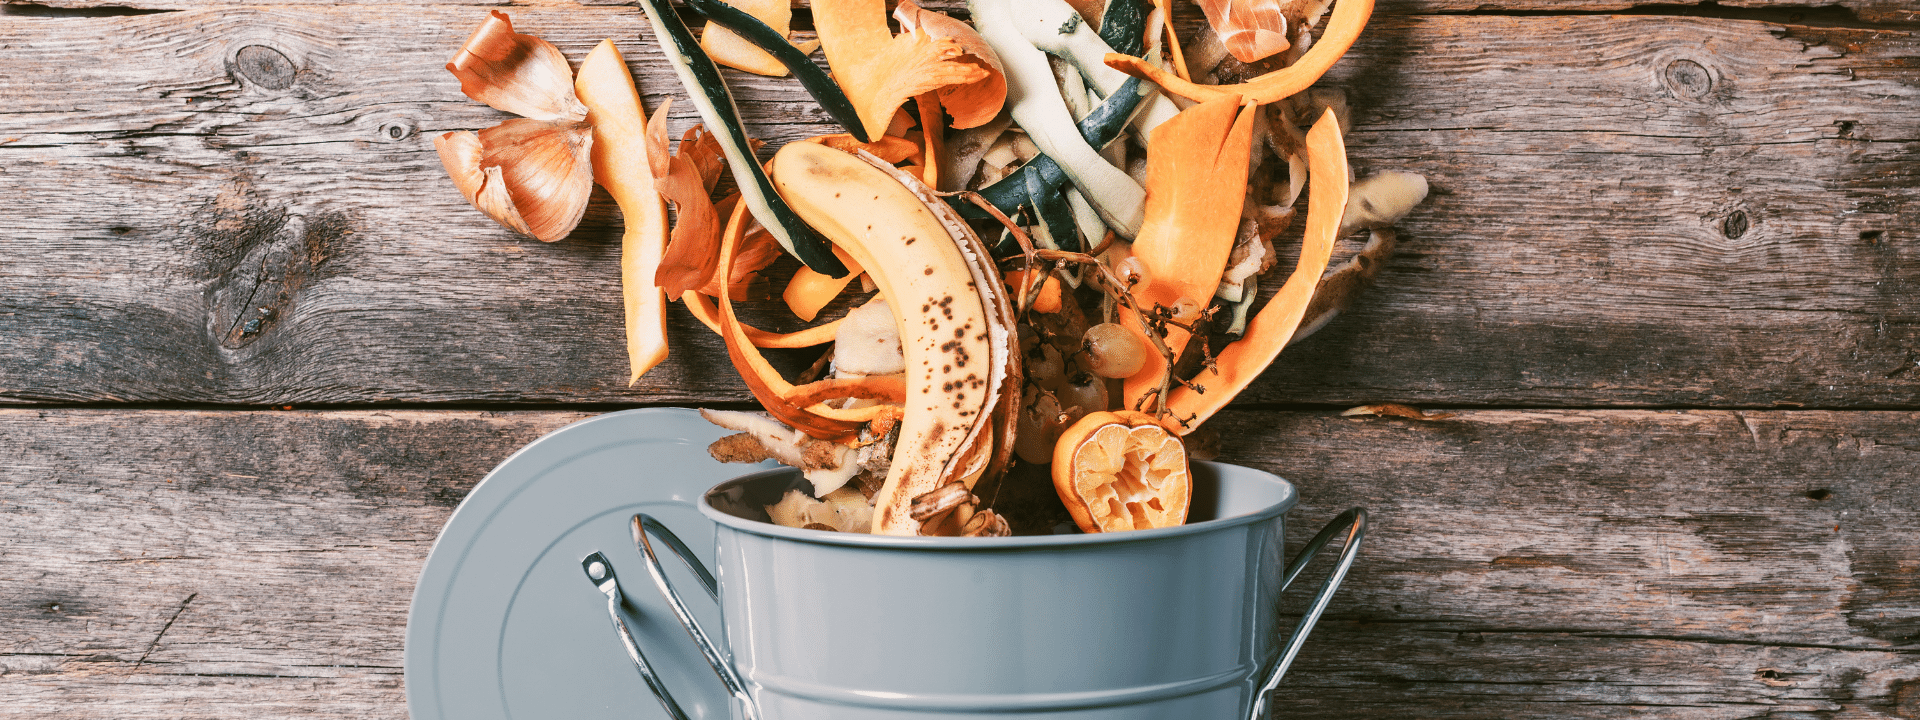 food waste déchets alimentaires